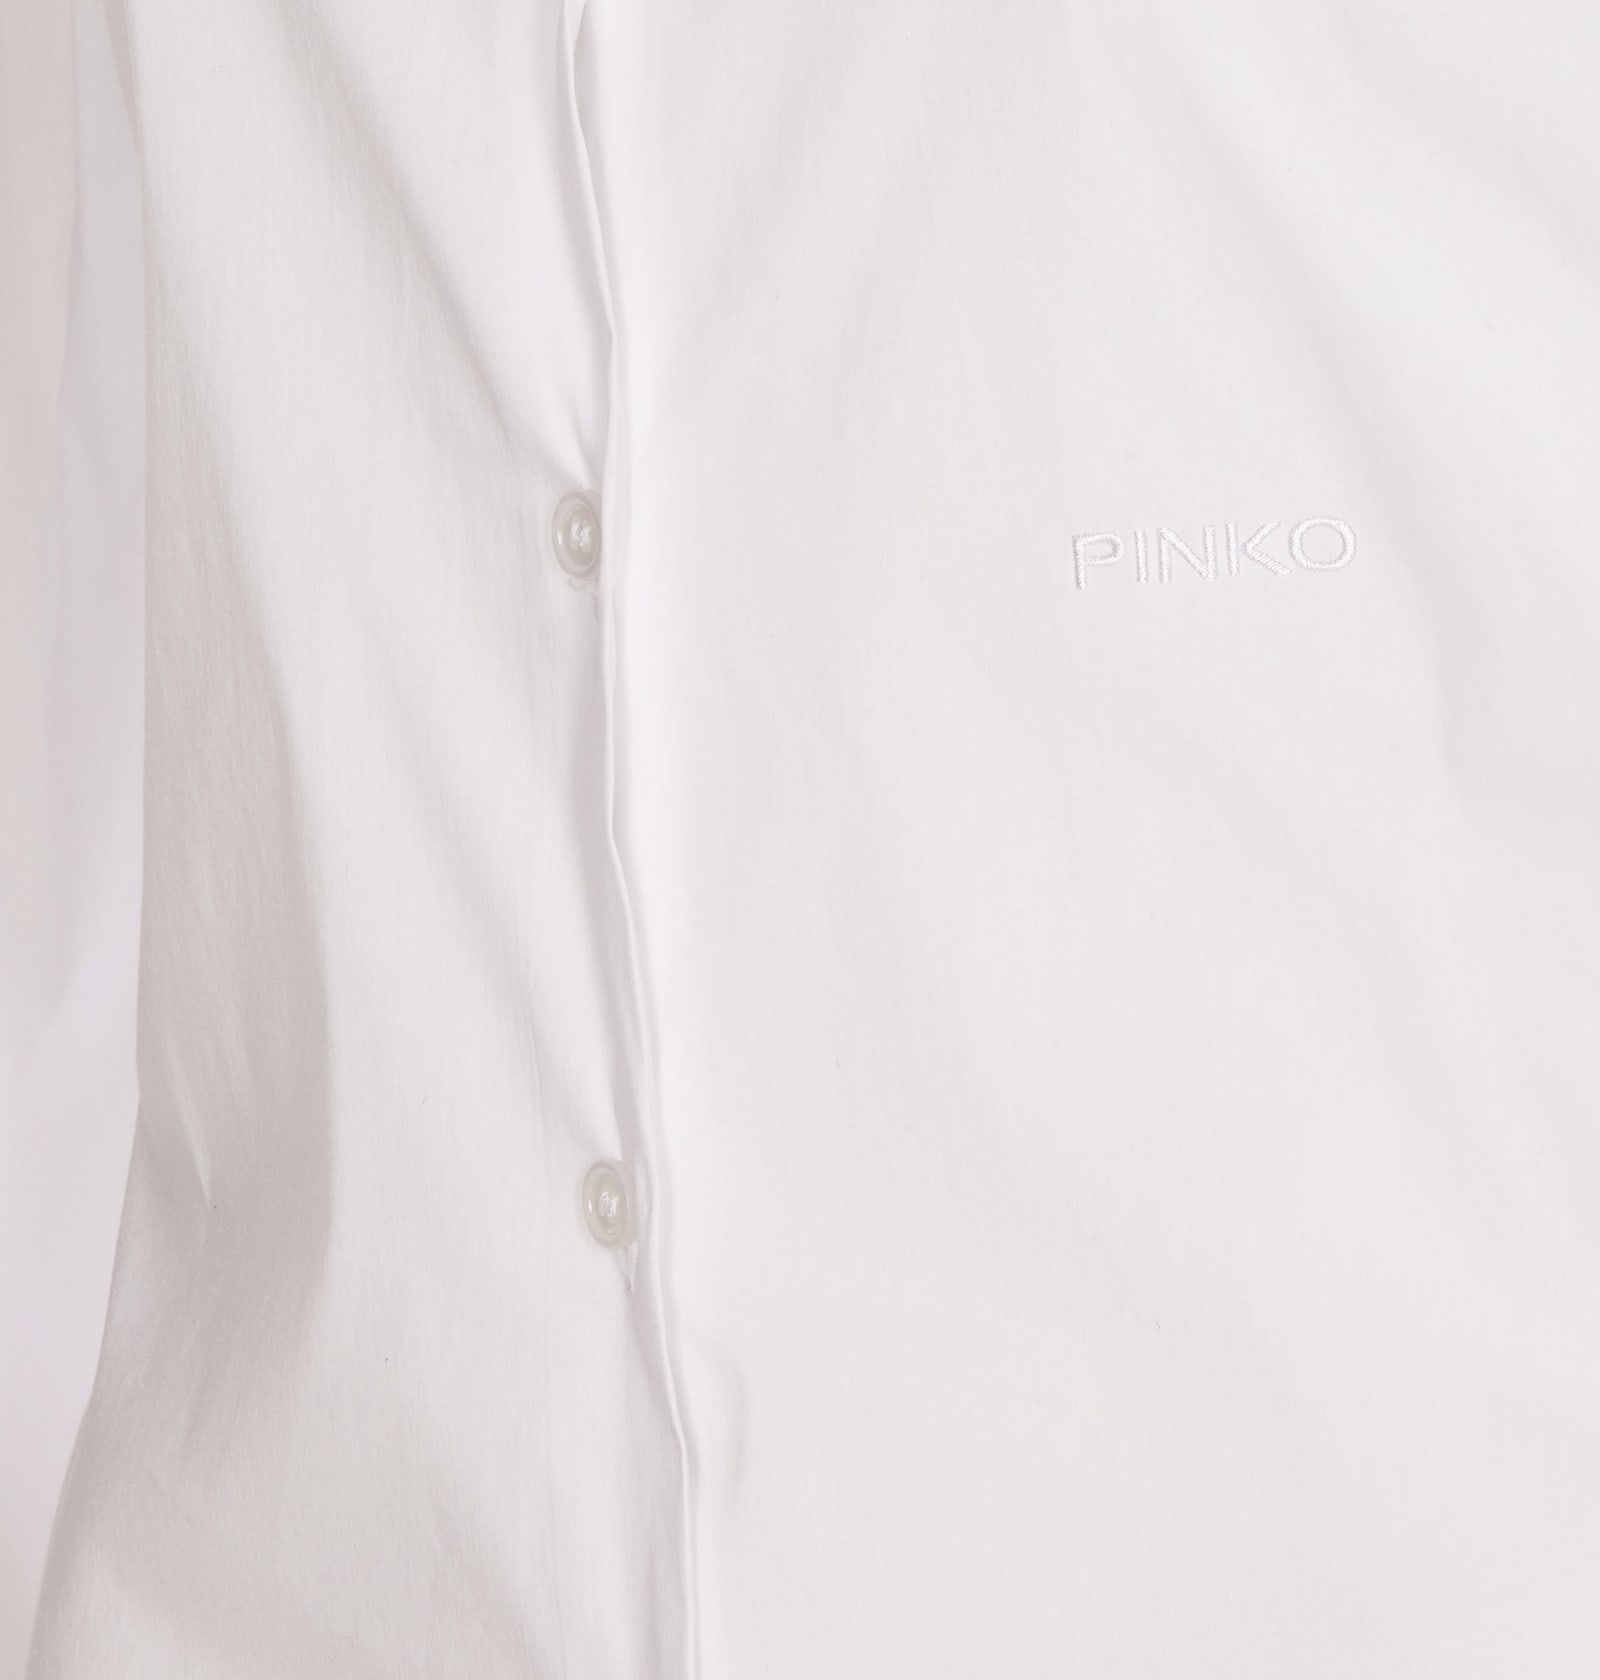 Shop Pinko Dory Shirt In Bianco Brill.